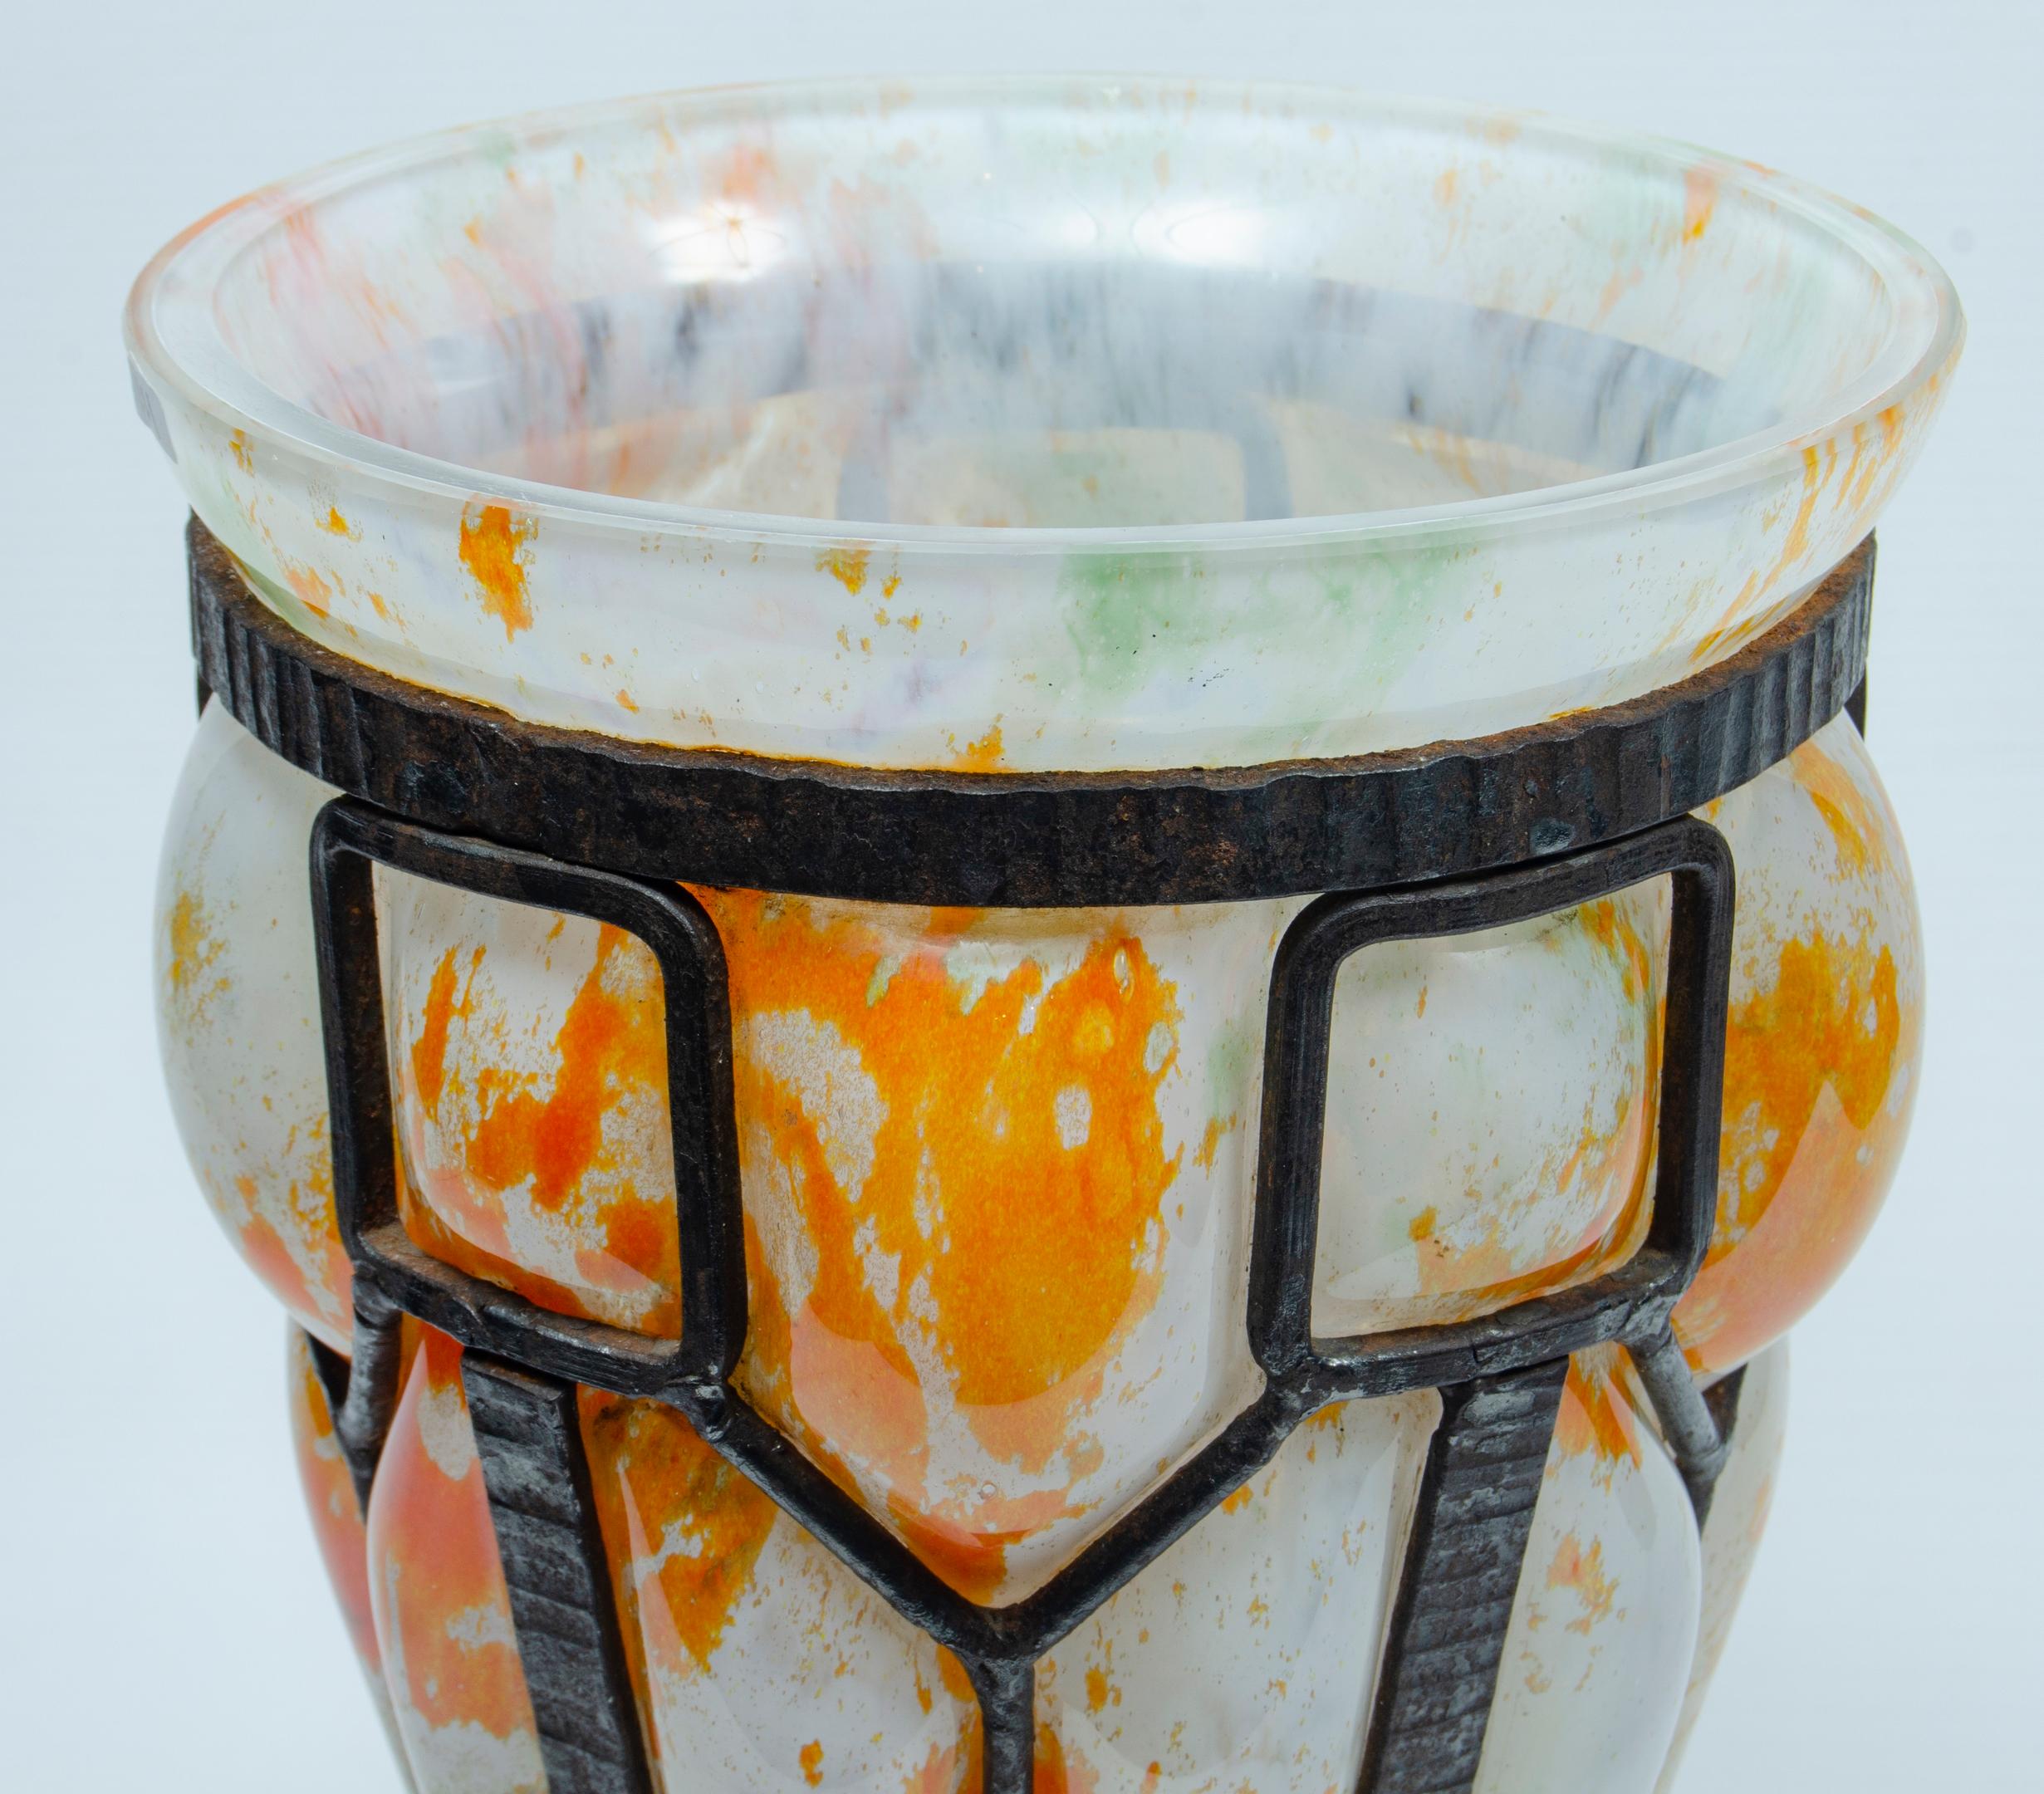 Artdeco blown iron glass attributed to Lorraine Origin France Circa 1930 Perfect condition colors orange and white.